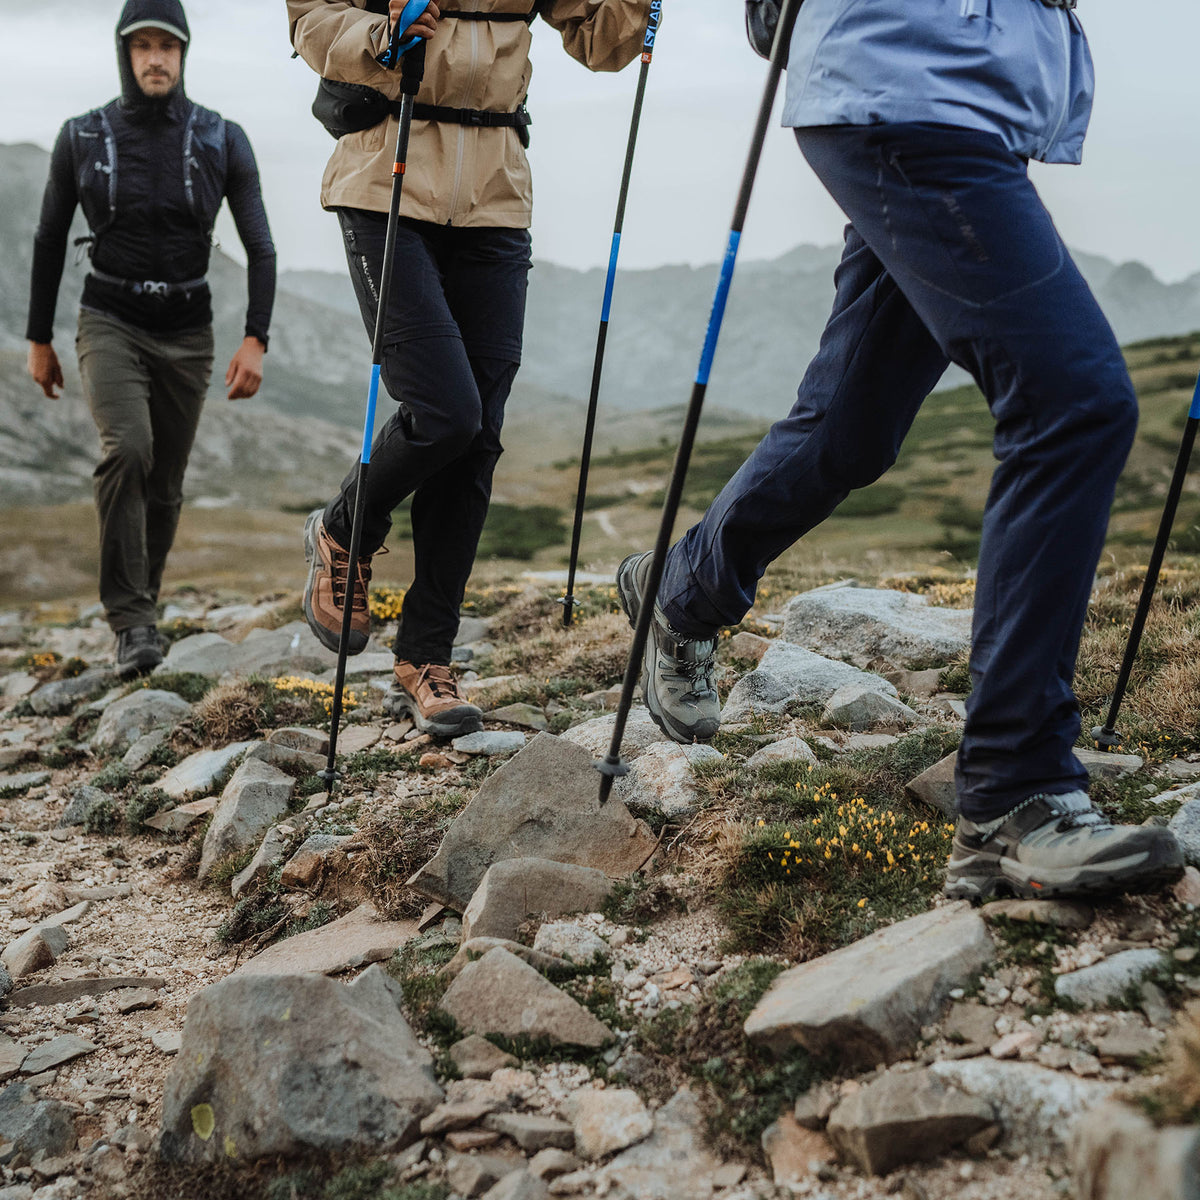 Salomon Women's Quest 4 GORE-TEX Hiking Boots 